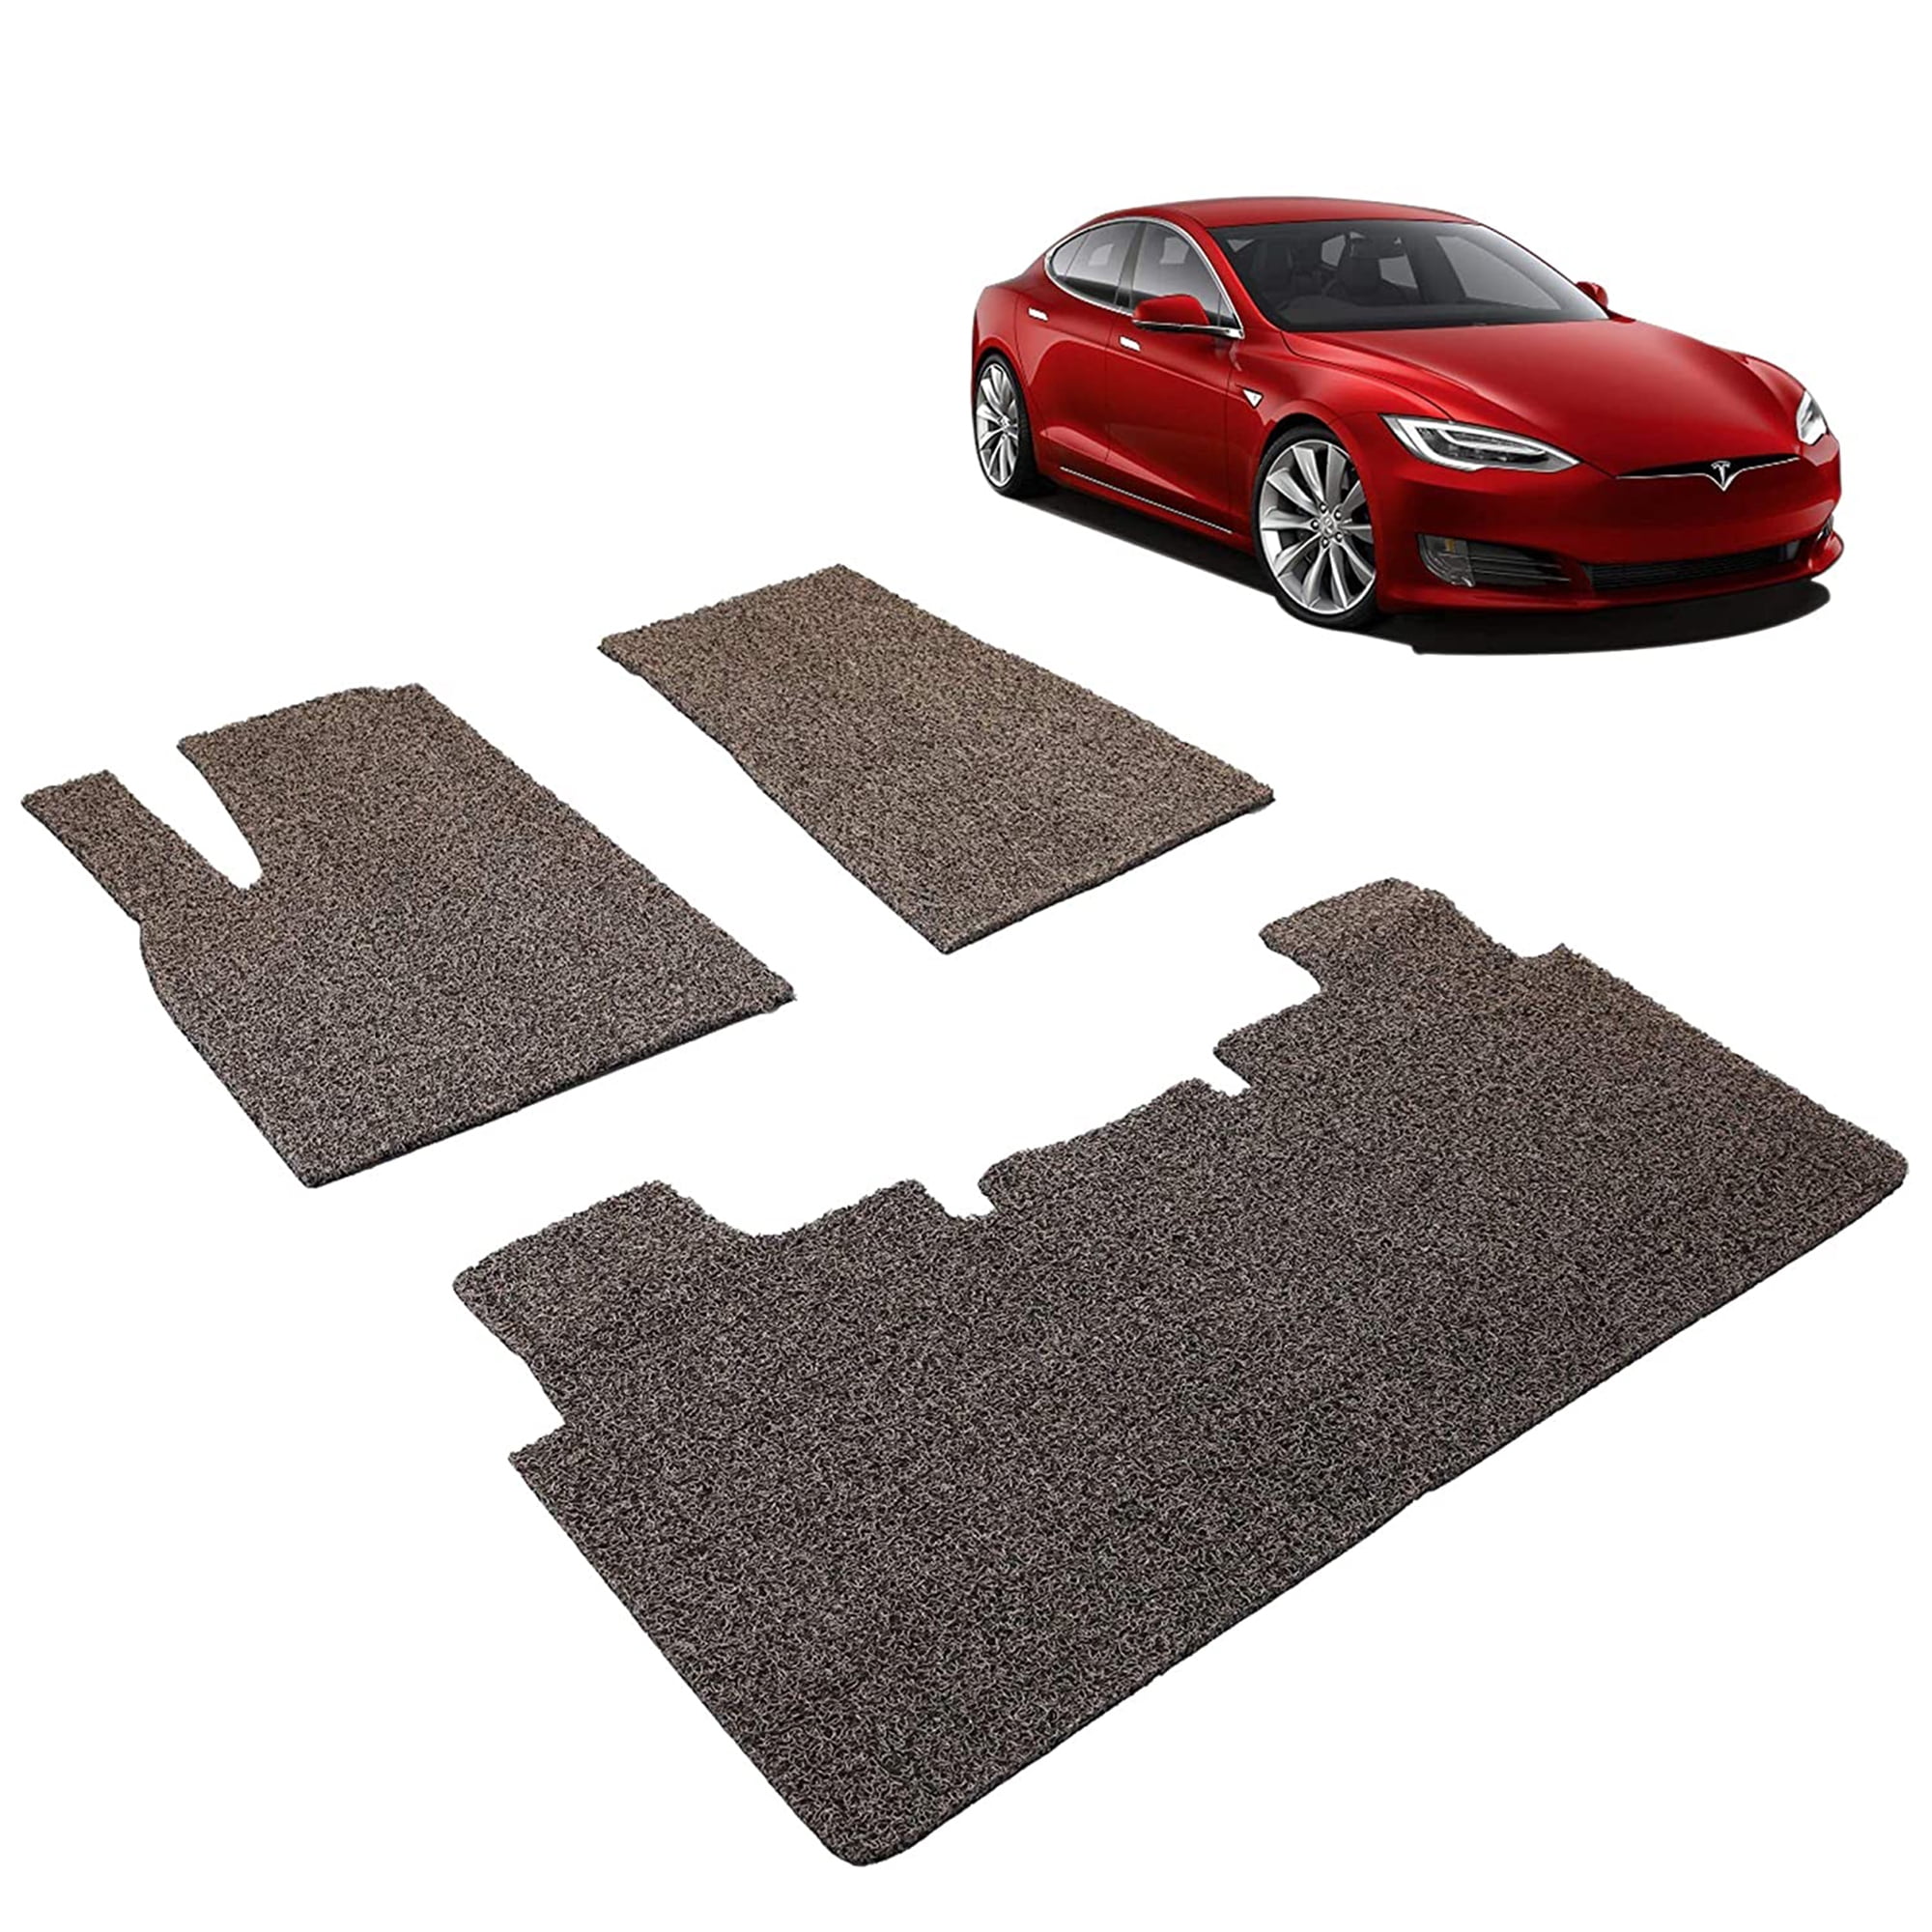 KARMAS PRODUCT Tesla Model S 5 Seats 3 Piece Car Accessories Floor Mats Set  Waterproof and Dustproof All Weather Performance Plus Heavy Duty，Grey